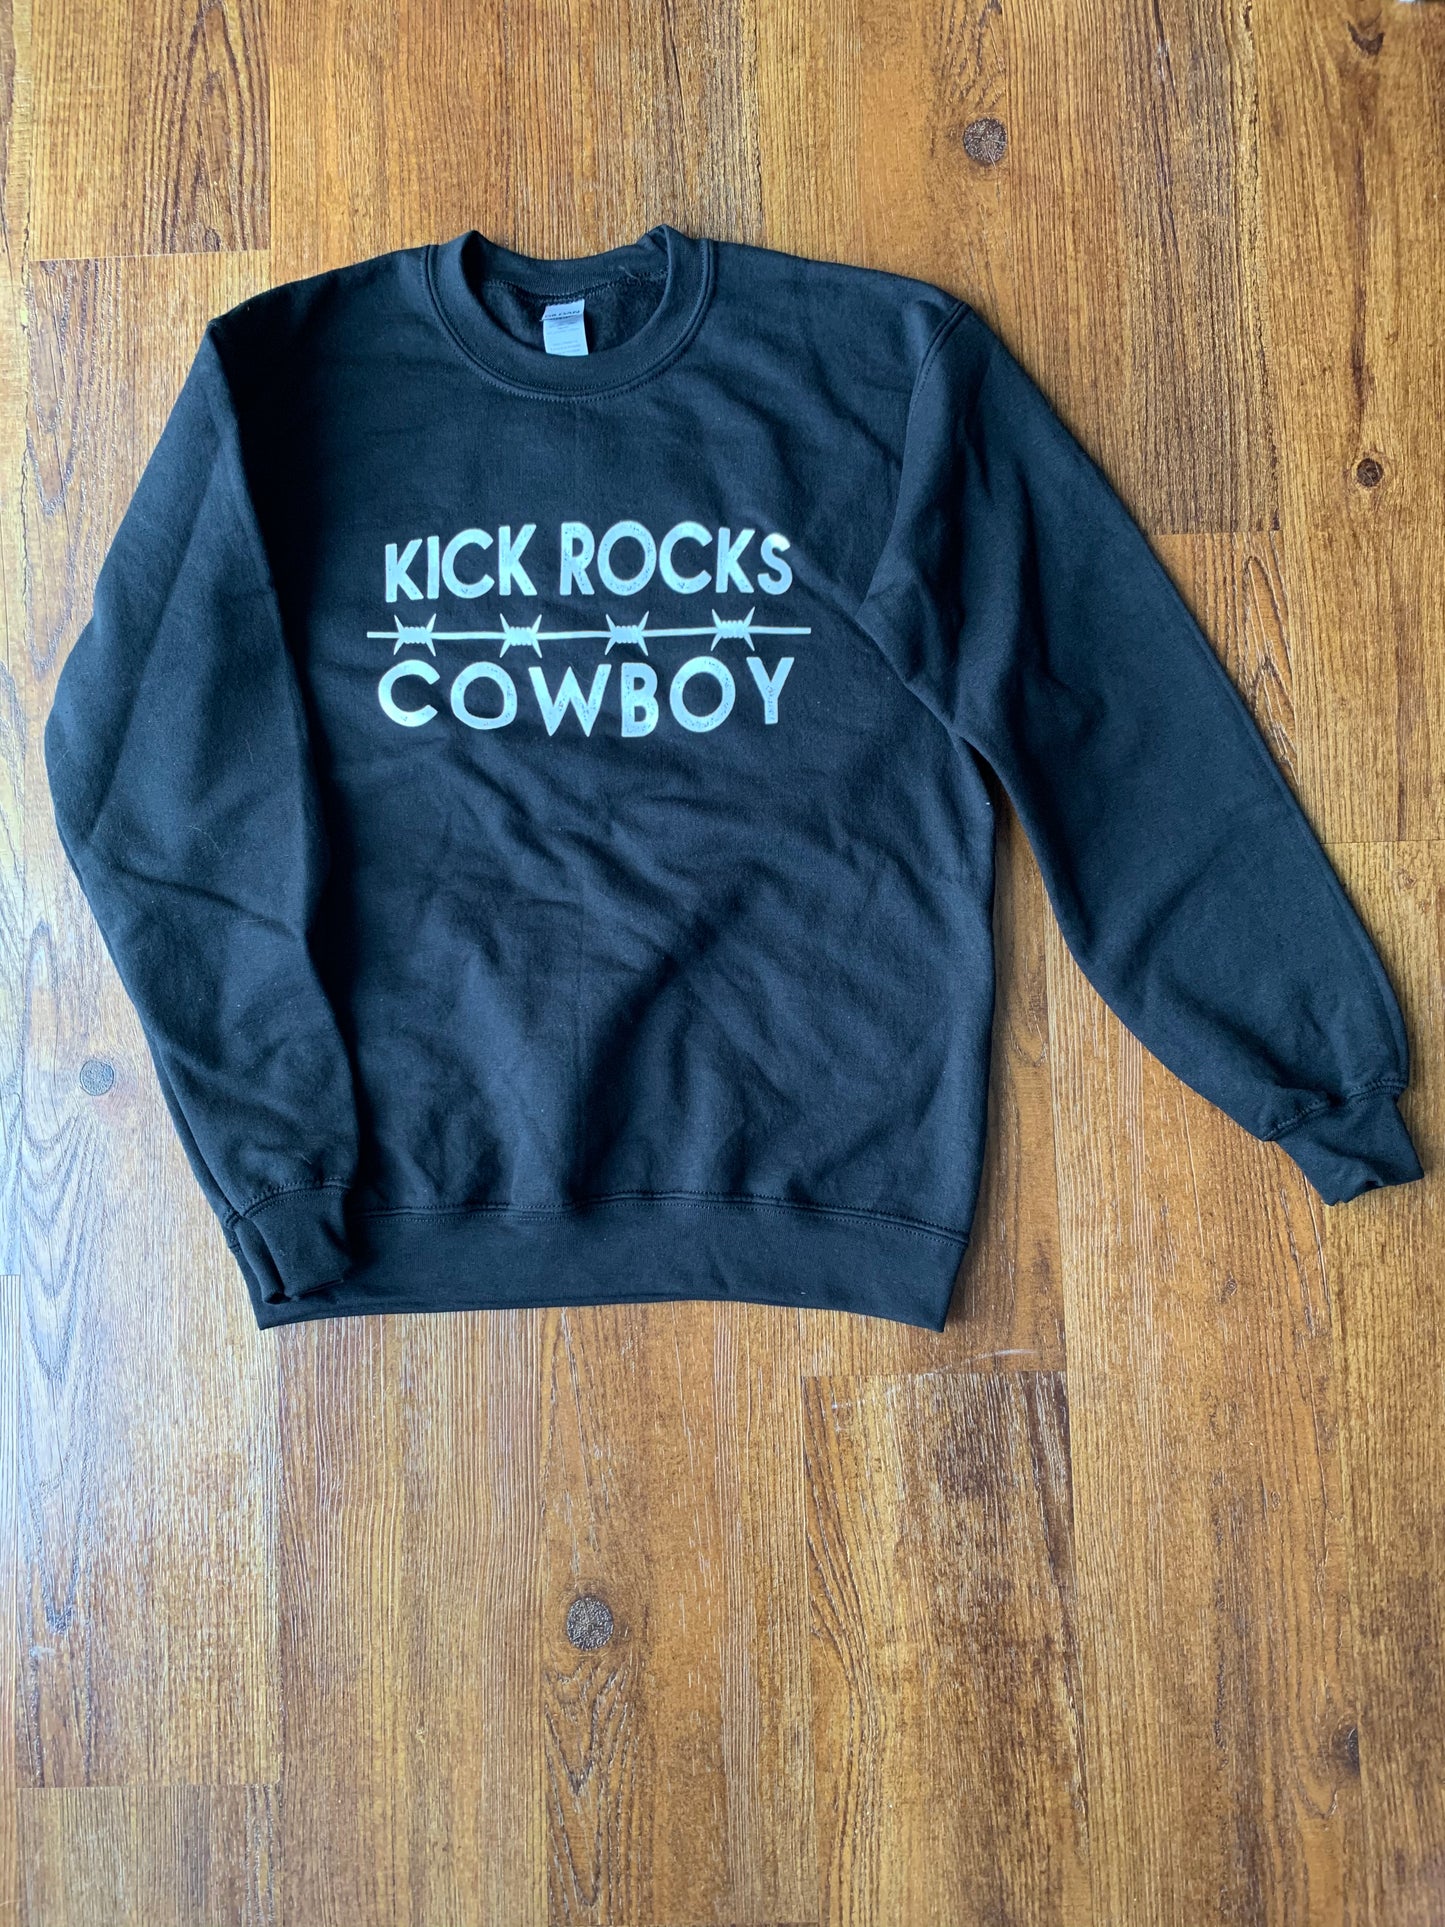 Kick Rocks Cowboy Crewneck Sweater